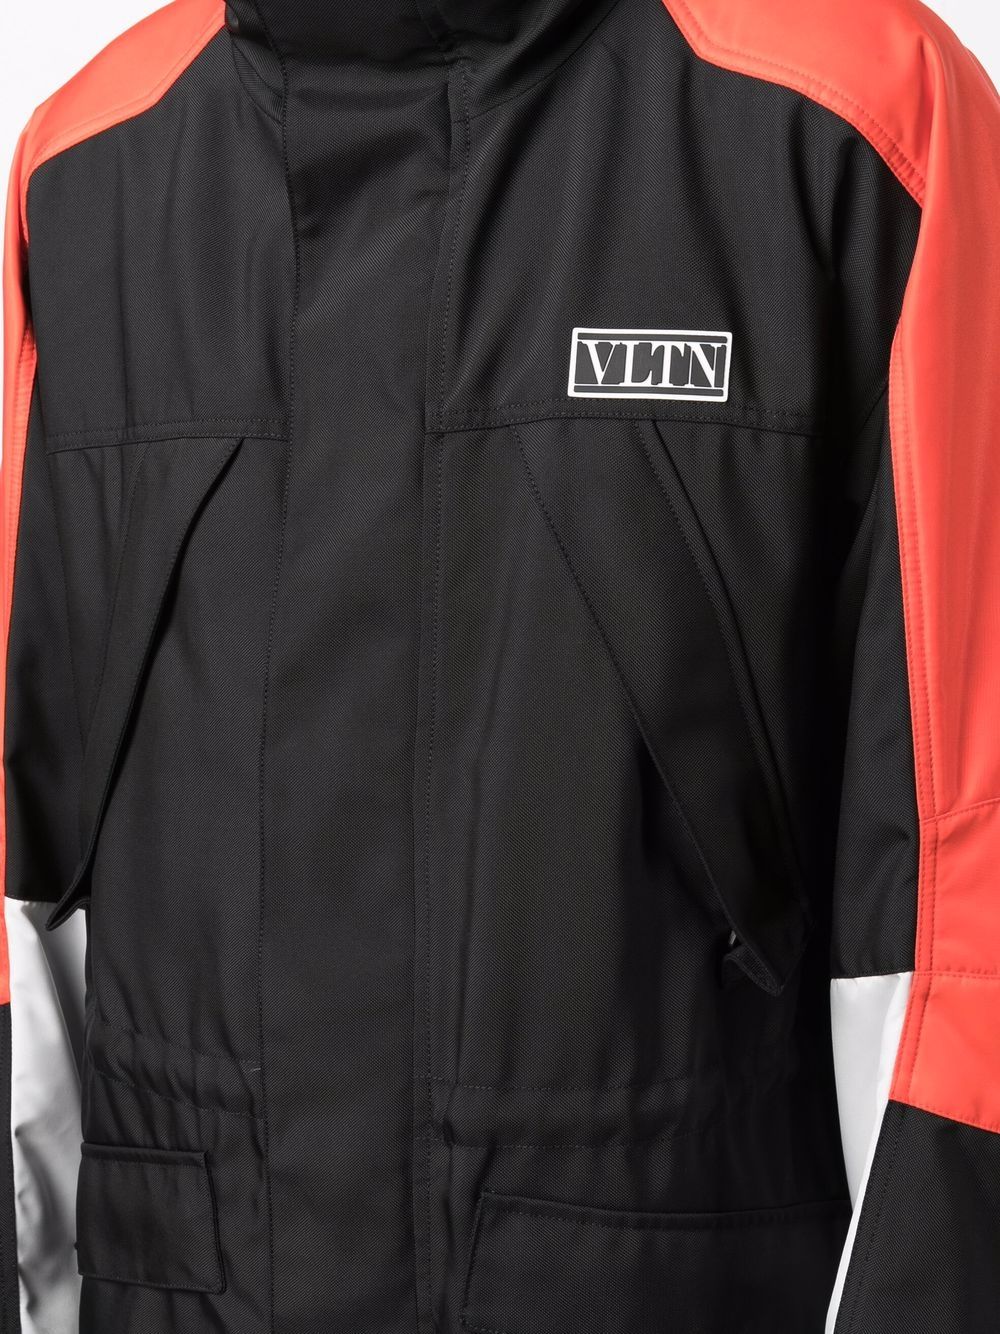 фото Valentino спортивная куртка со вставками